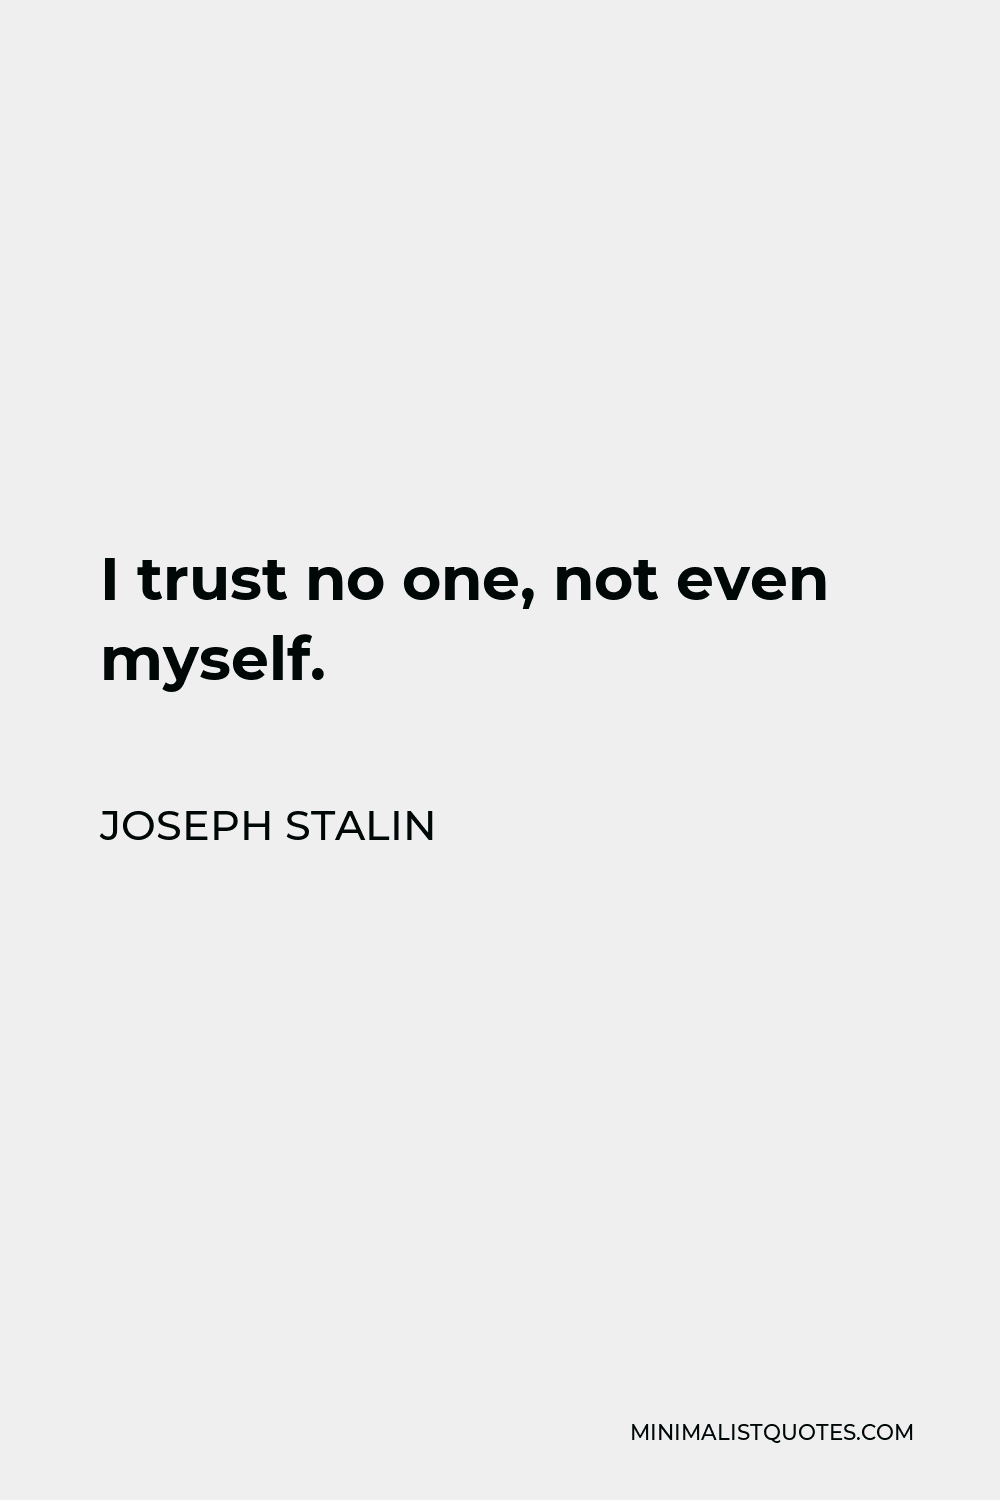 Joseph Stalin Quote - I trust no one, not even myself.